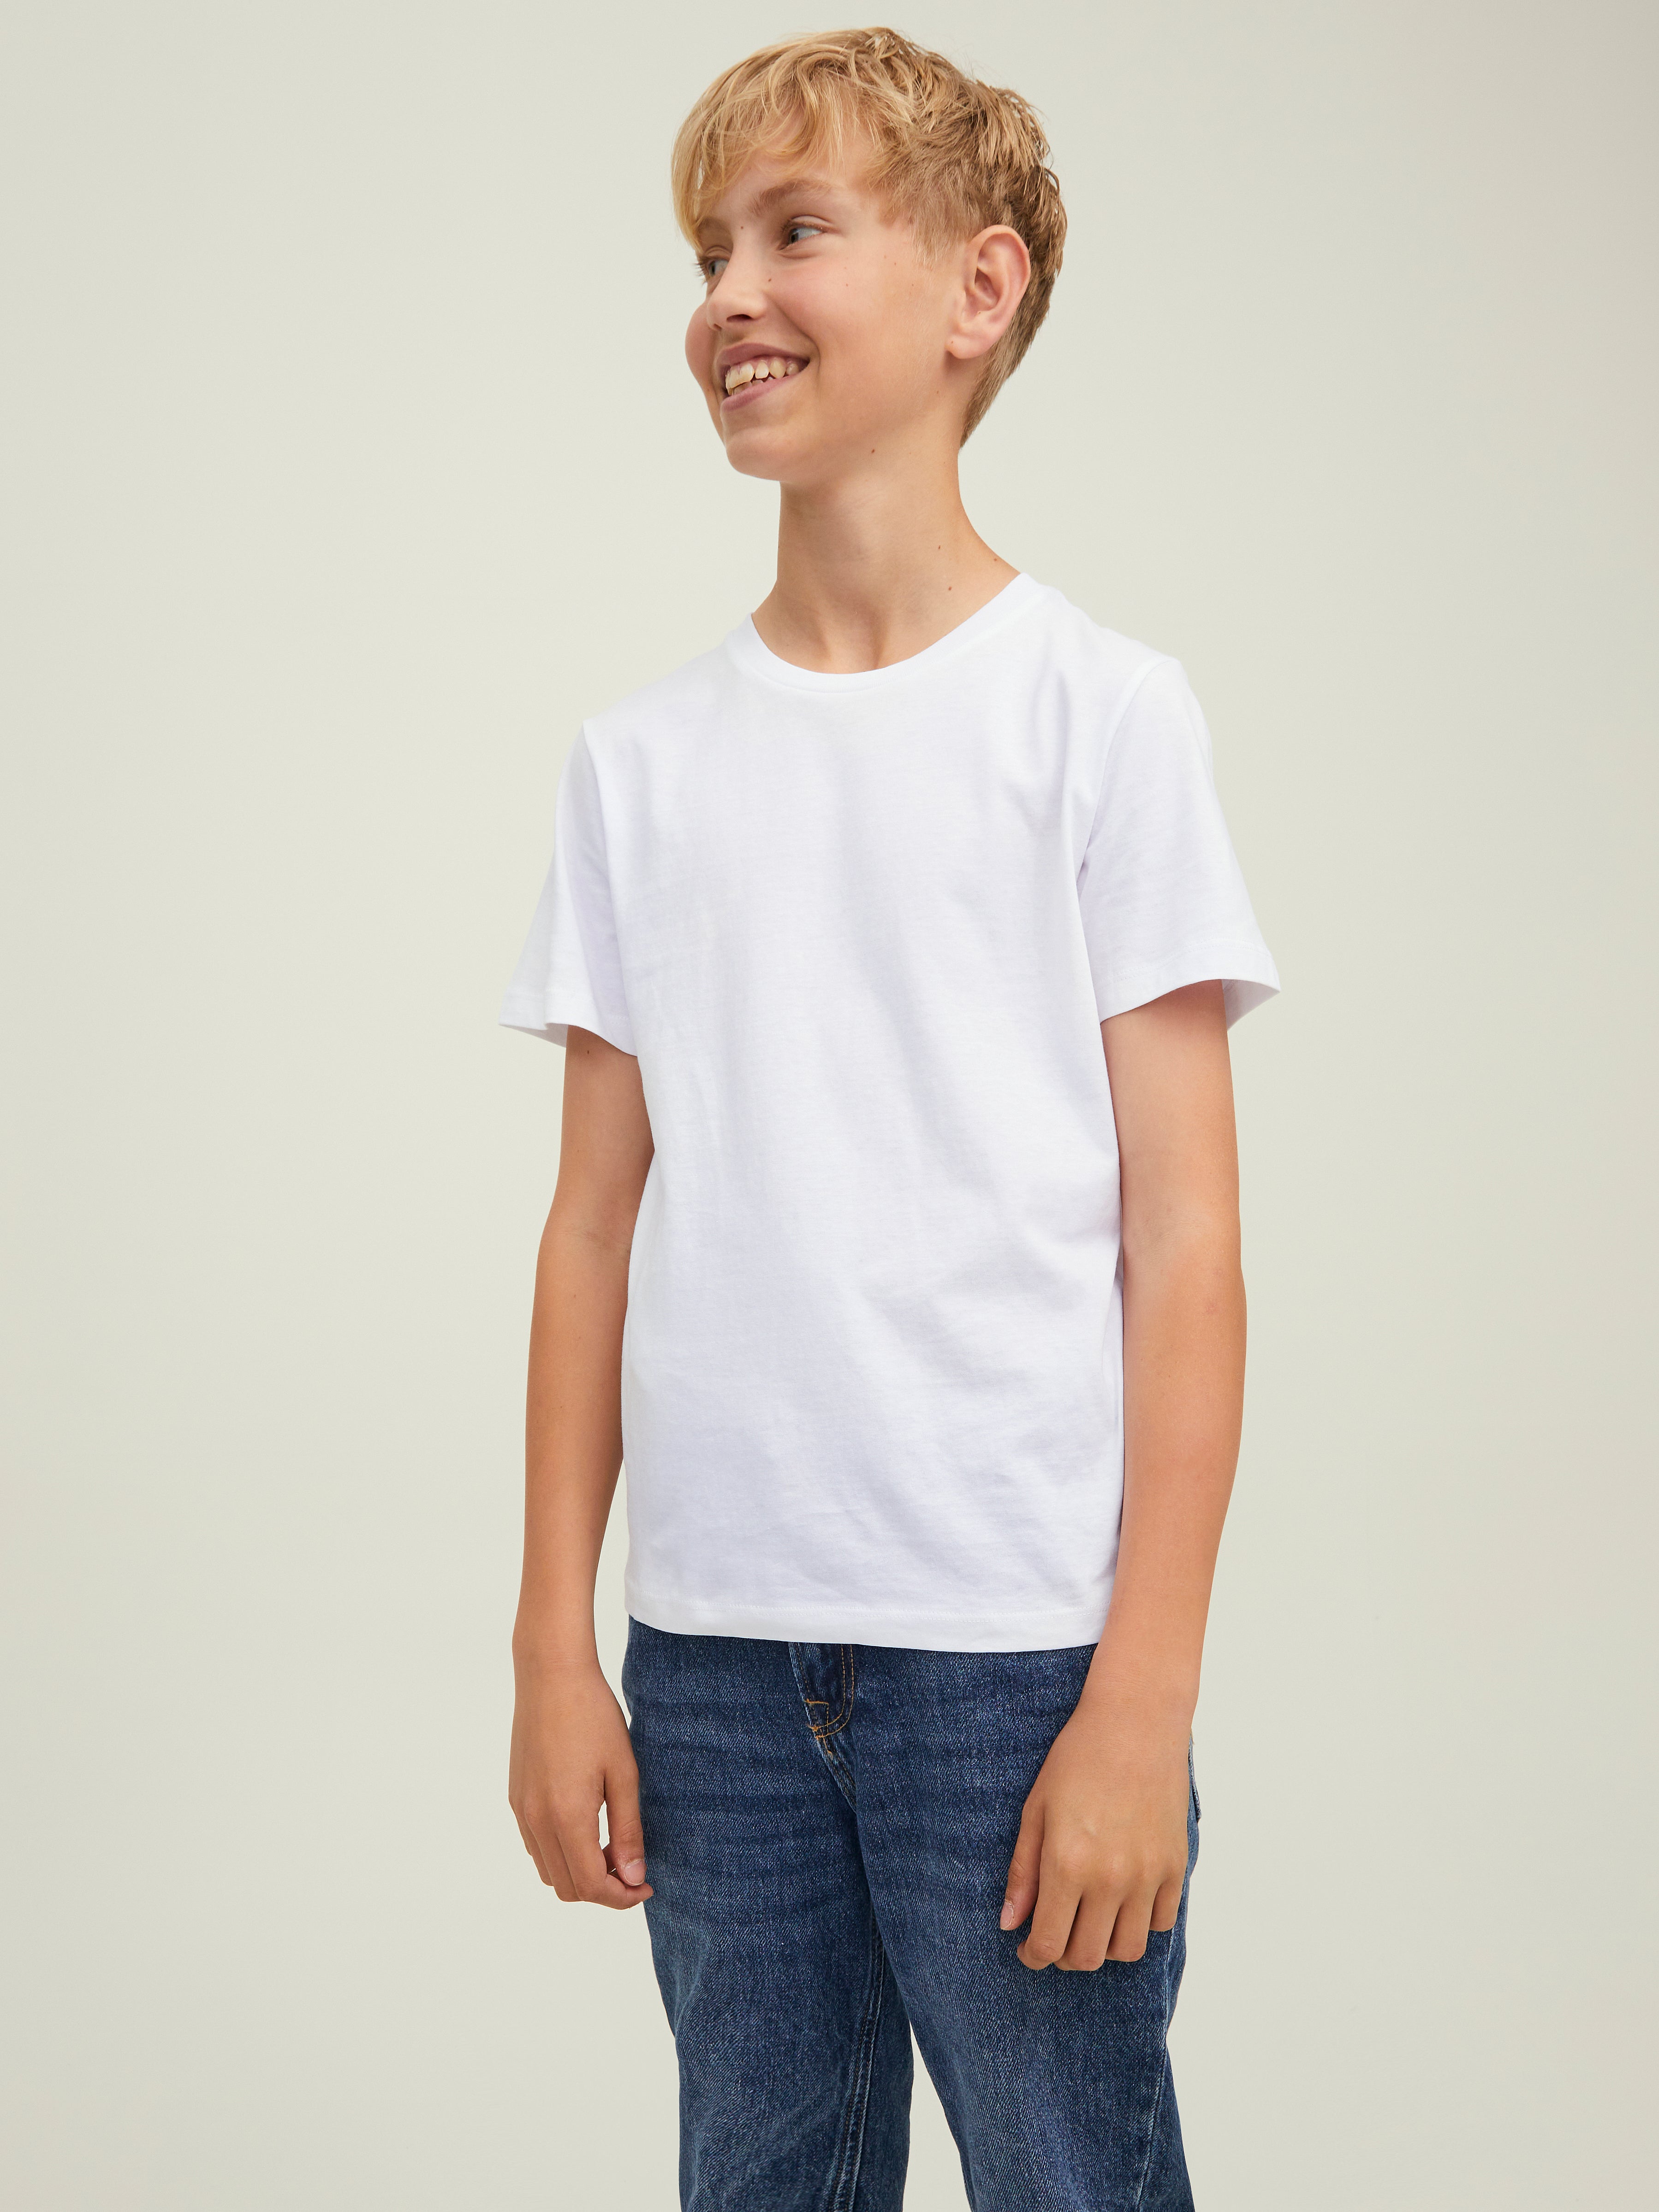 Zara T-shirt White 13Y discount 68% KIDS FASHION Shirts & T-shirts Elegant 